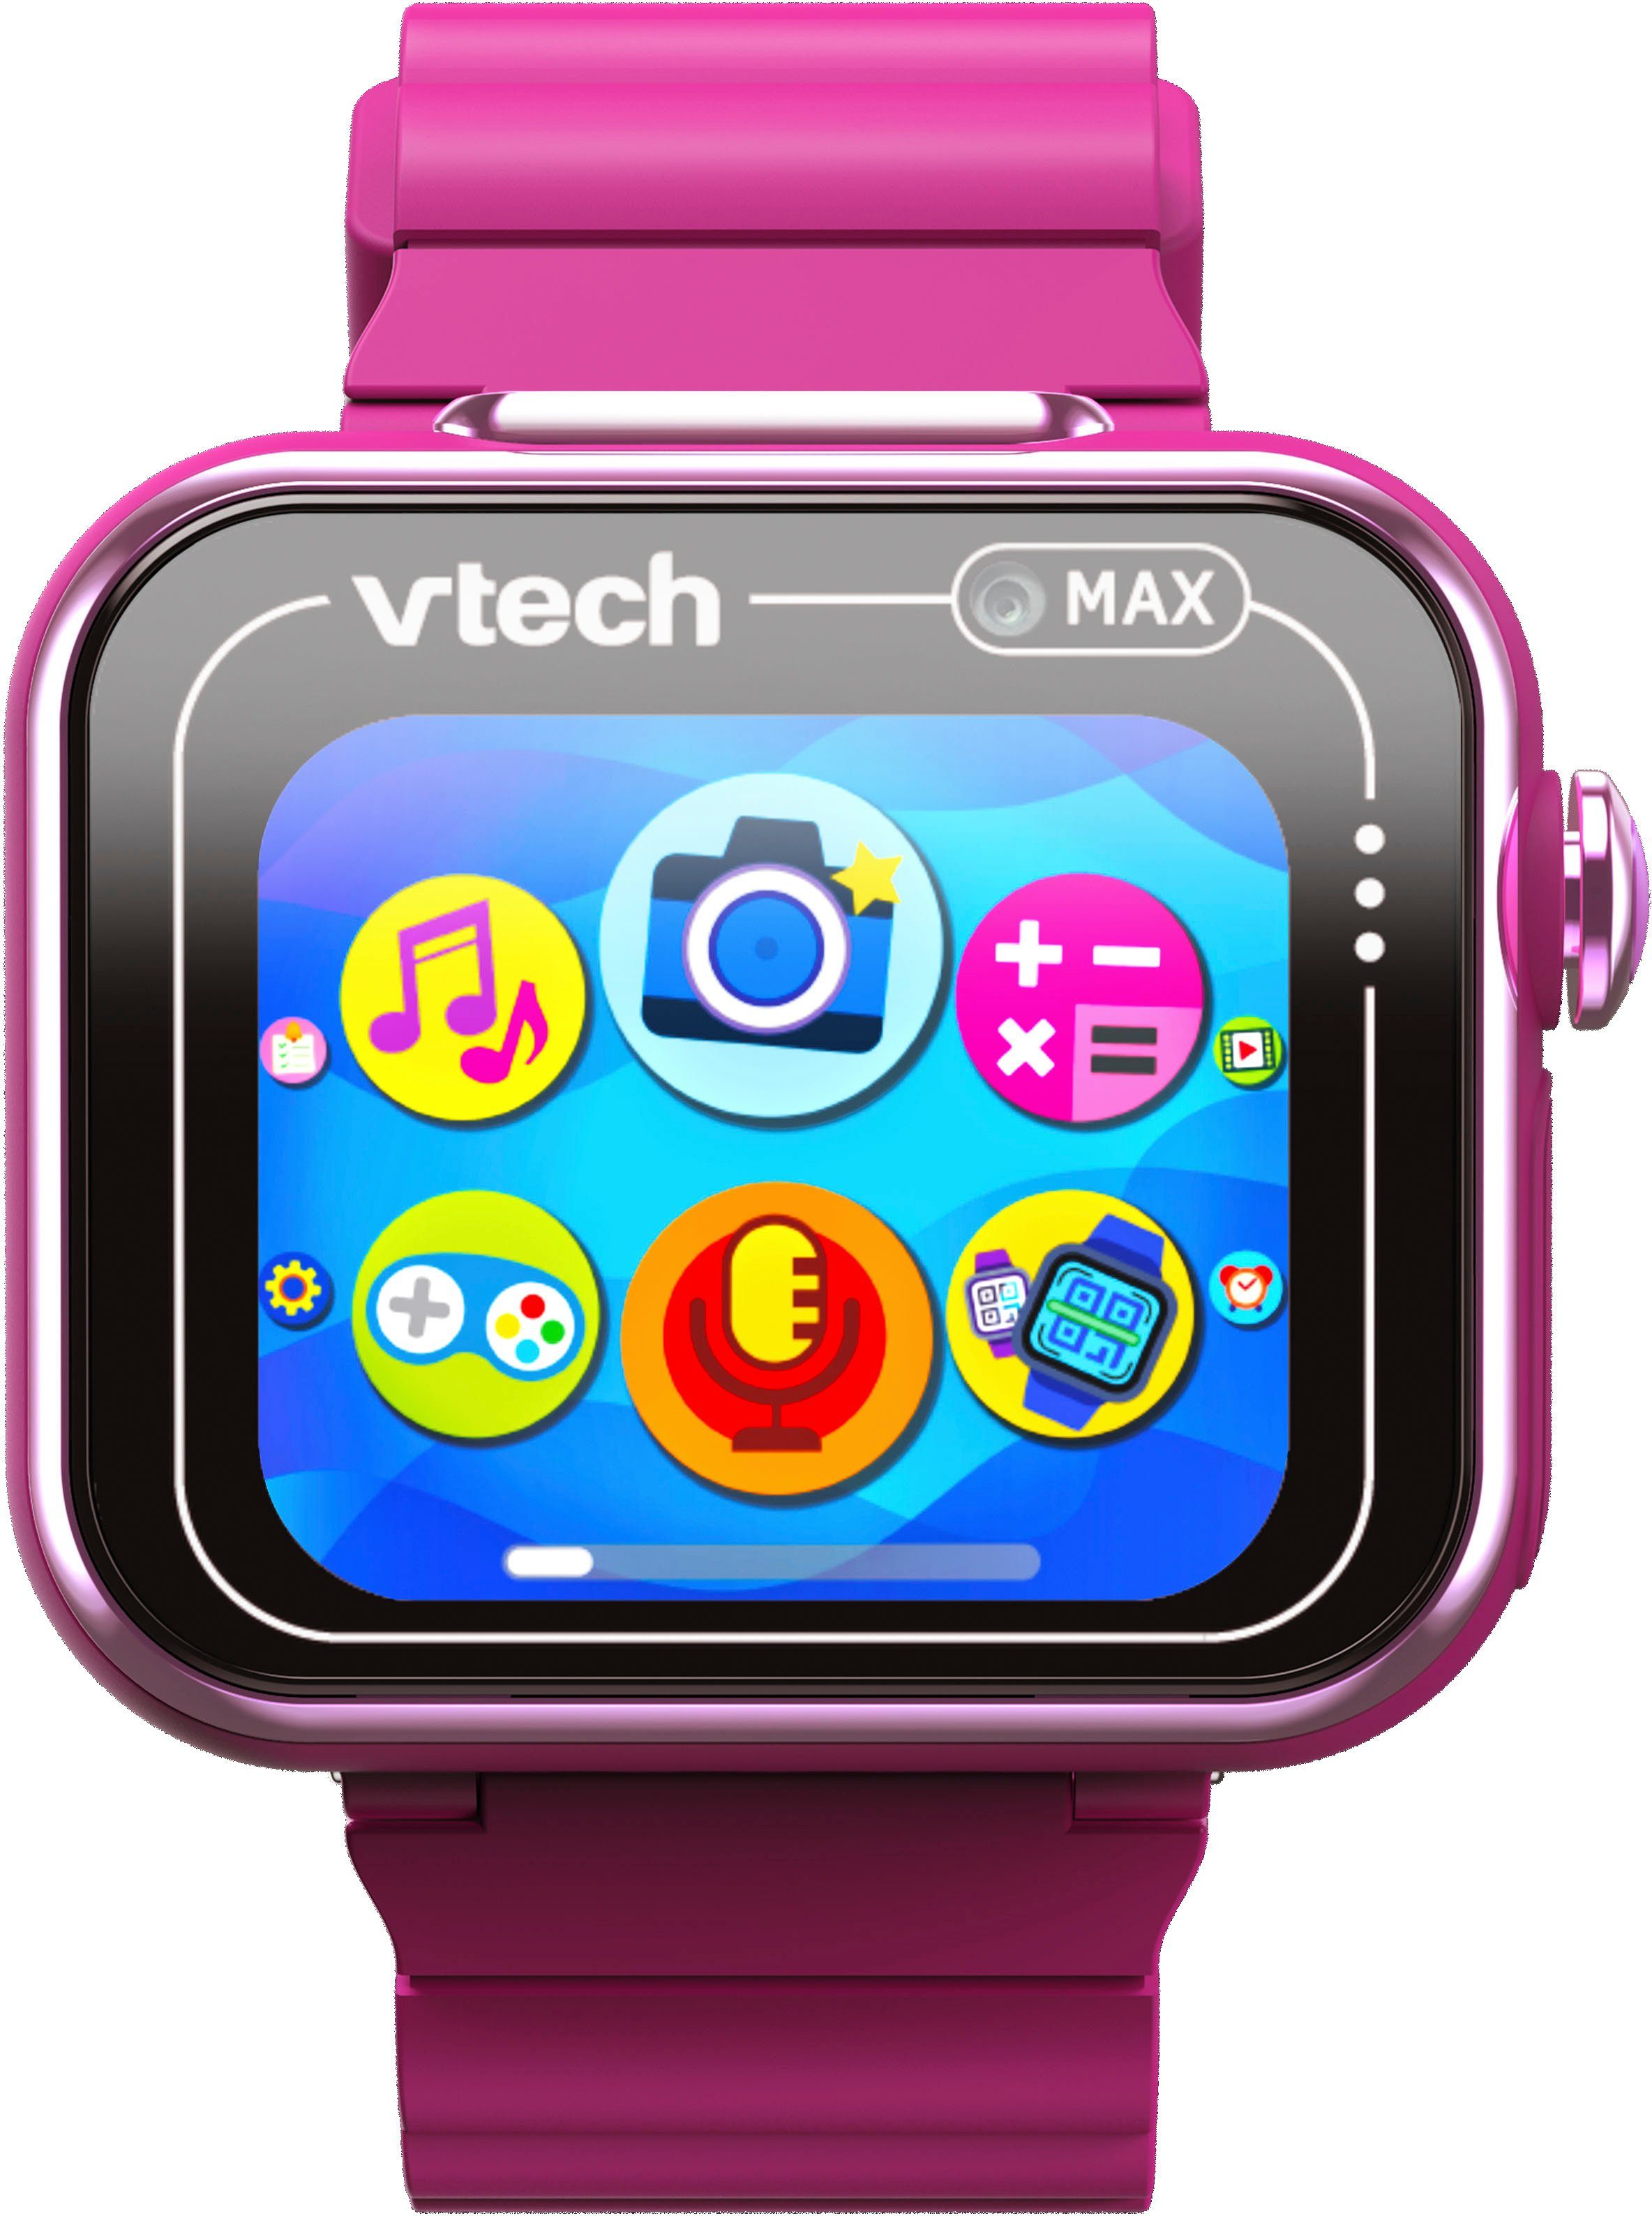 Vtech® Lernspielzeug KidiZoom lila MAX Smart Watch